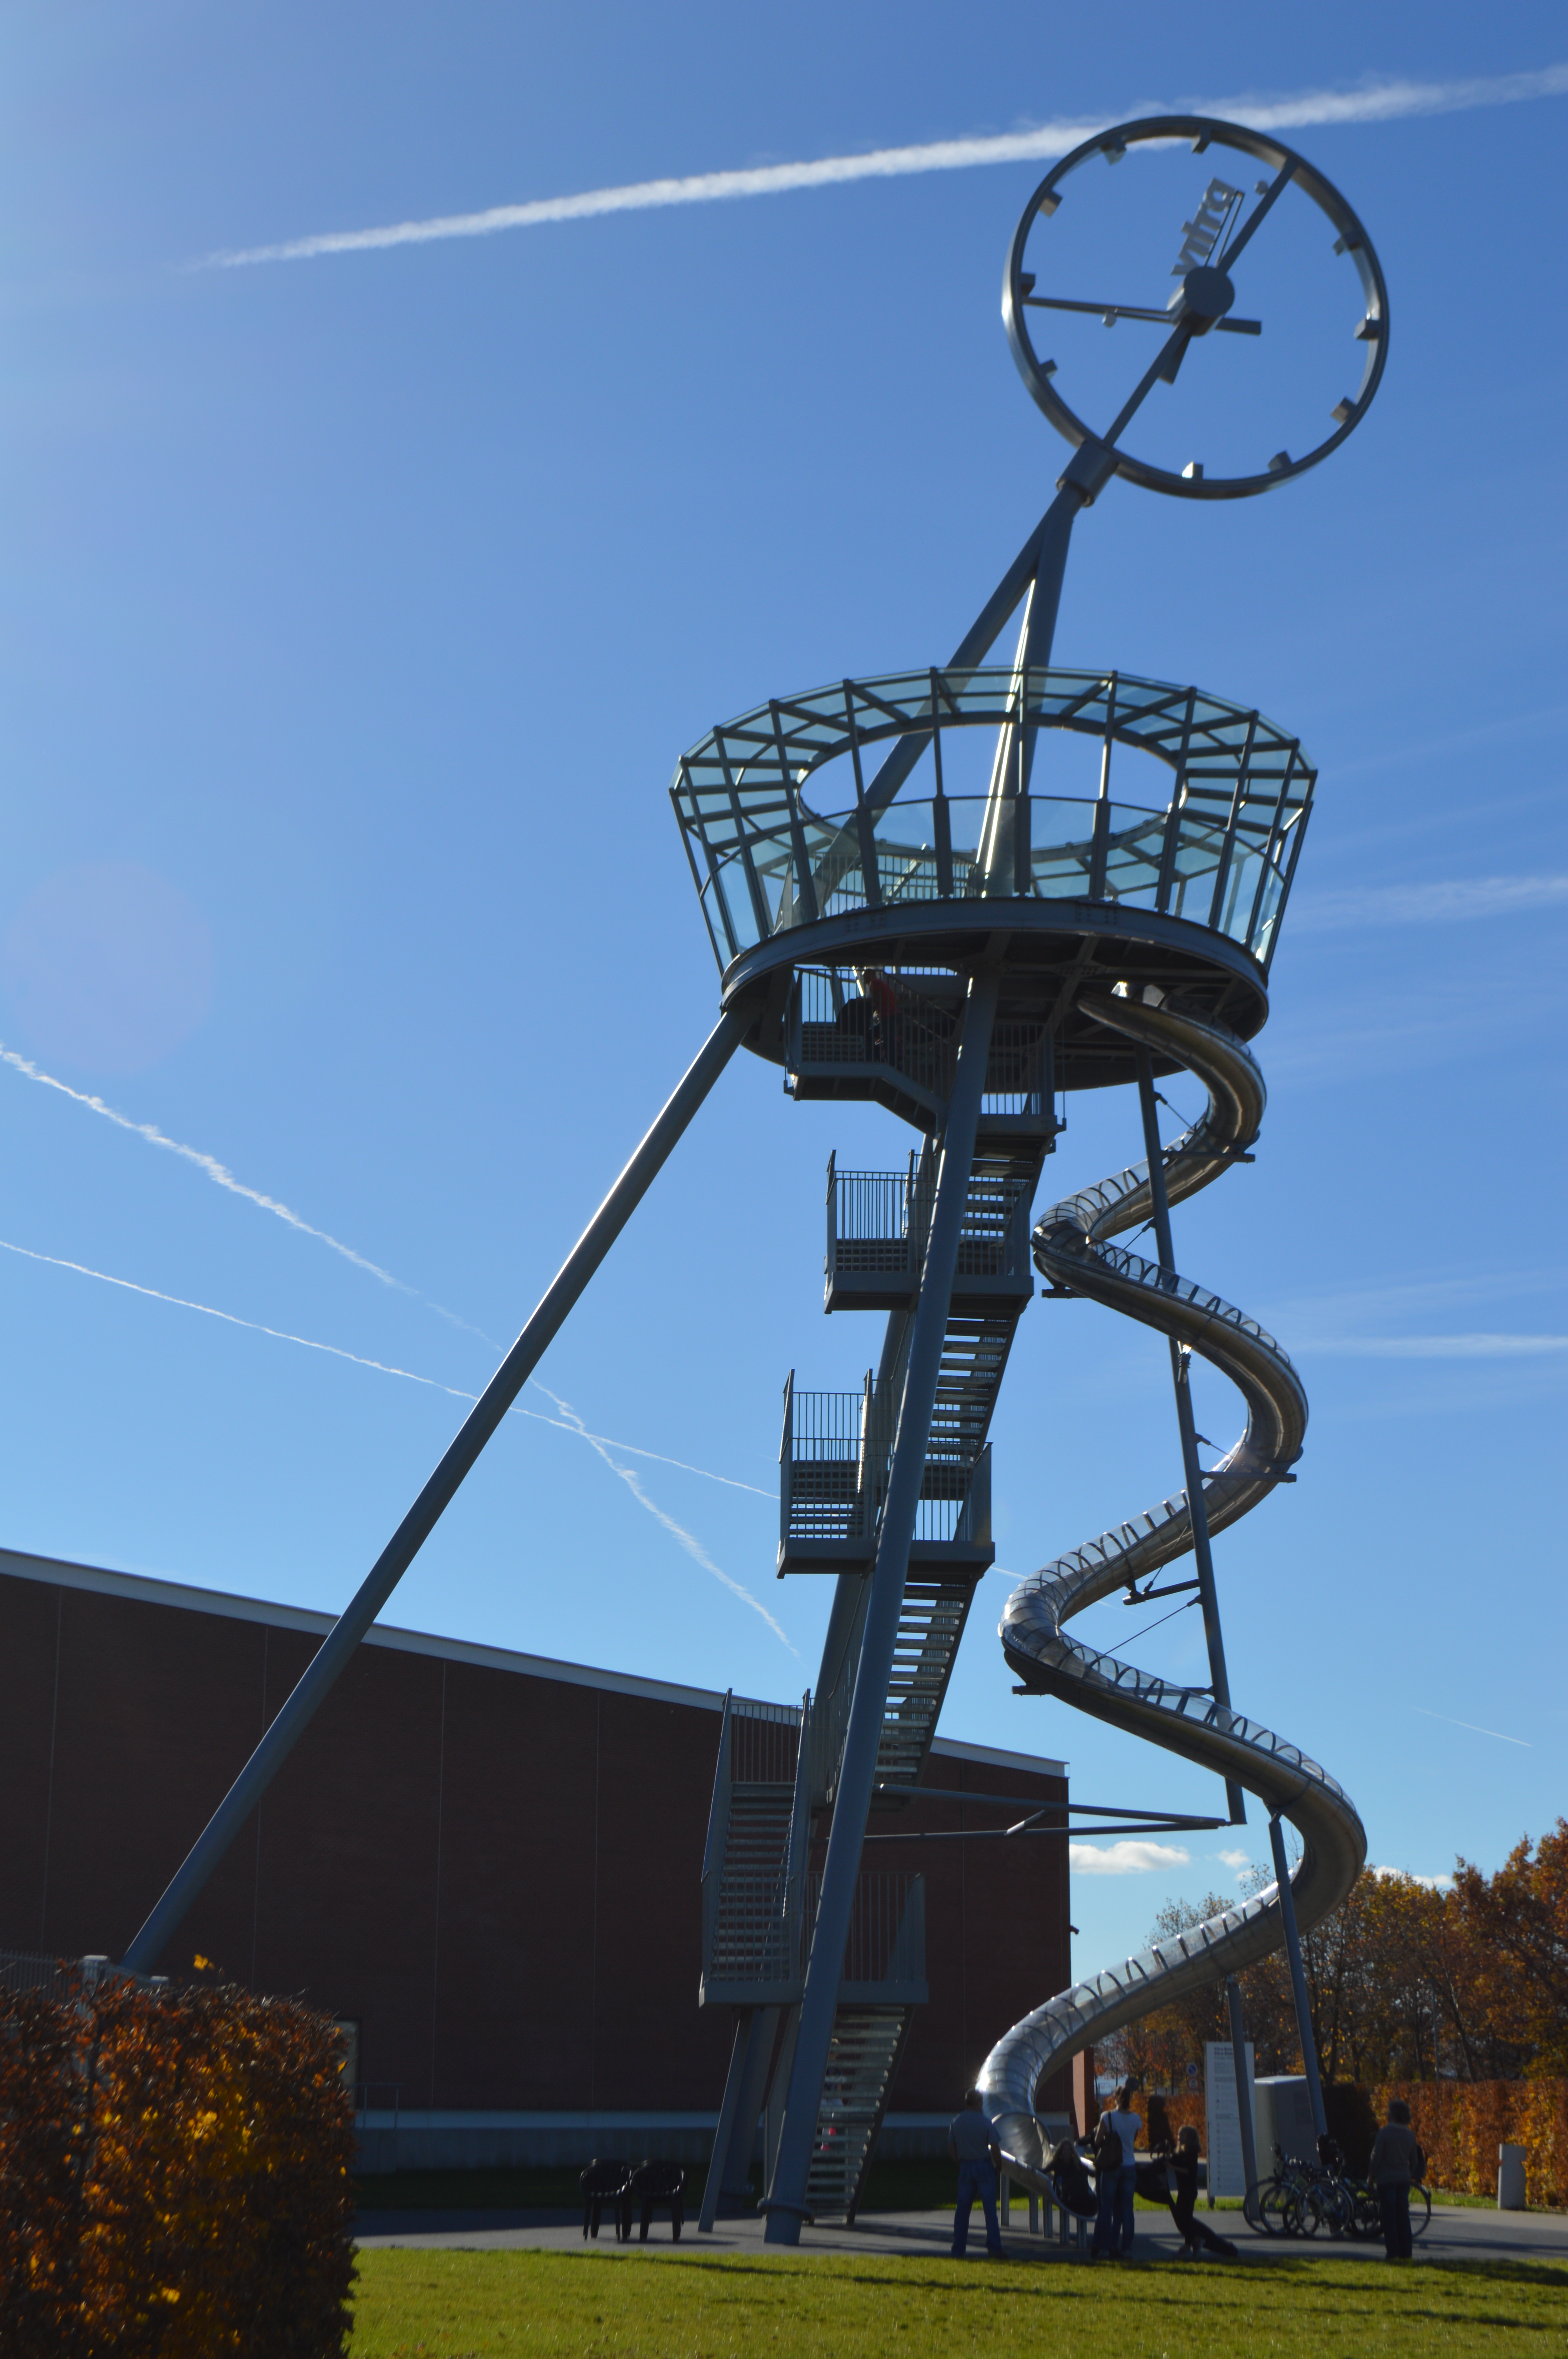 Vitra Slide Tower mit Rutschbahn
Carsten Höller, 2014